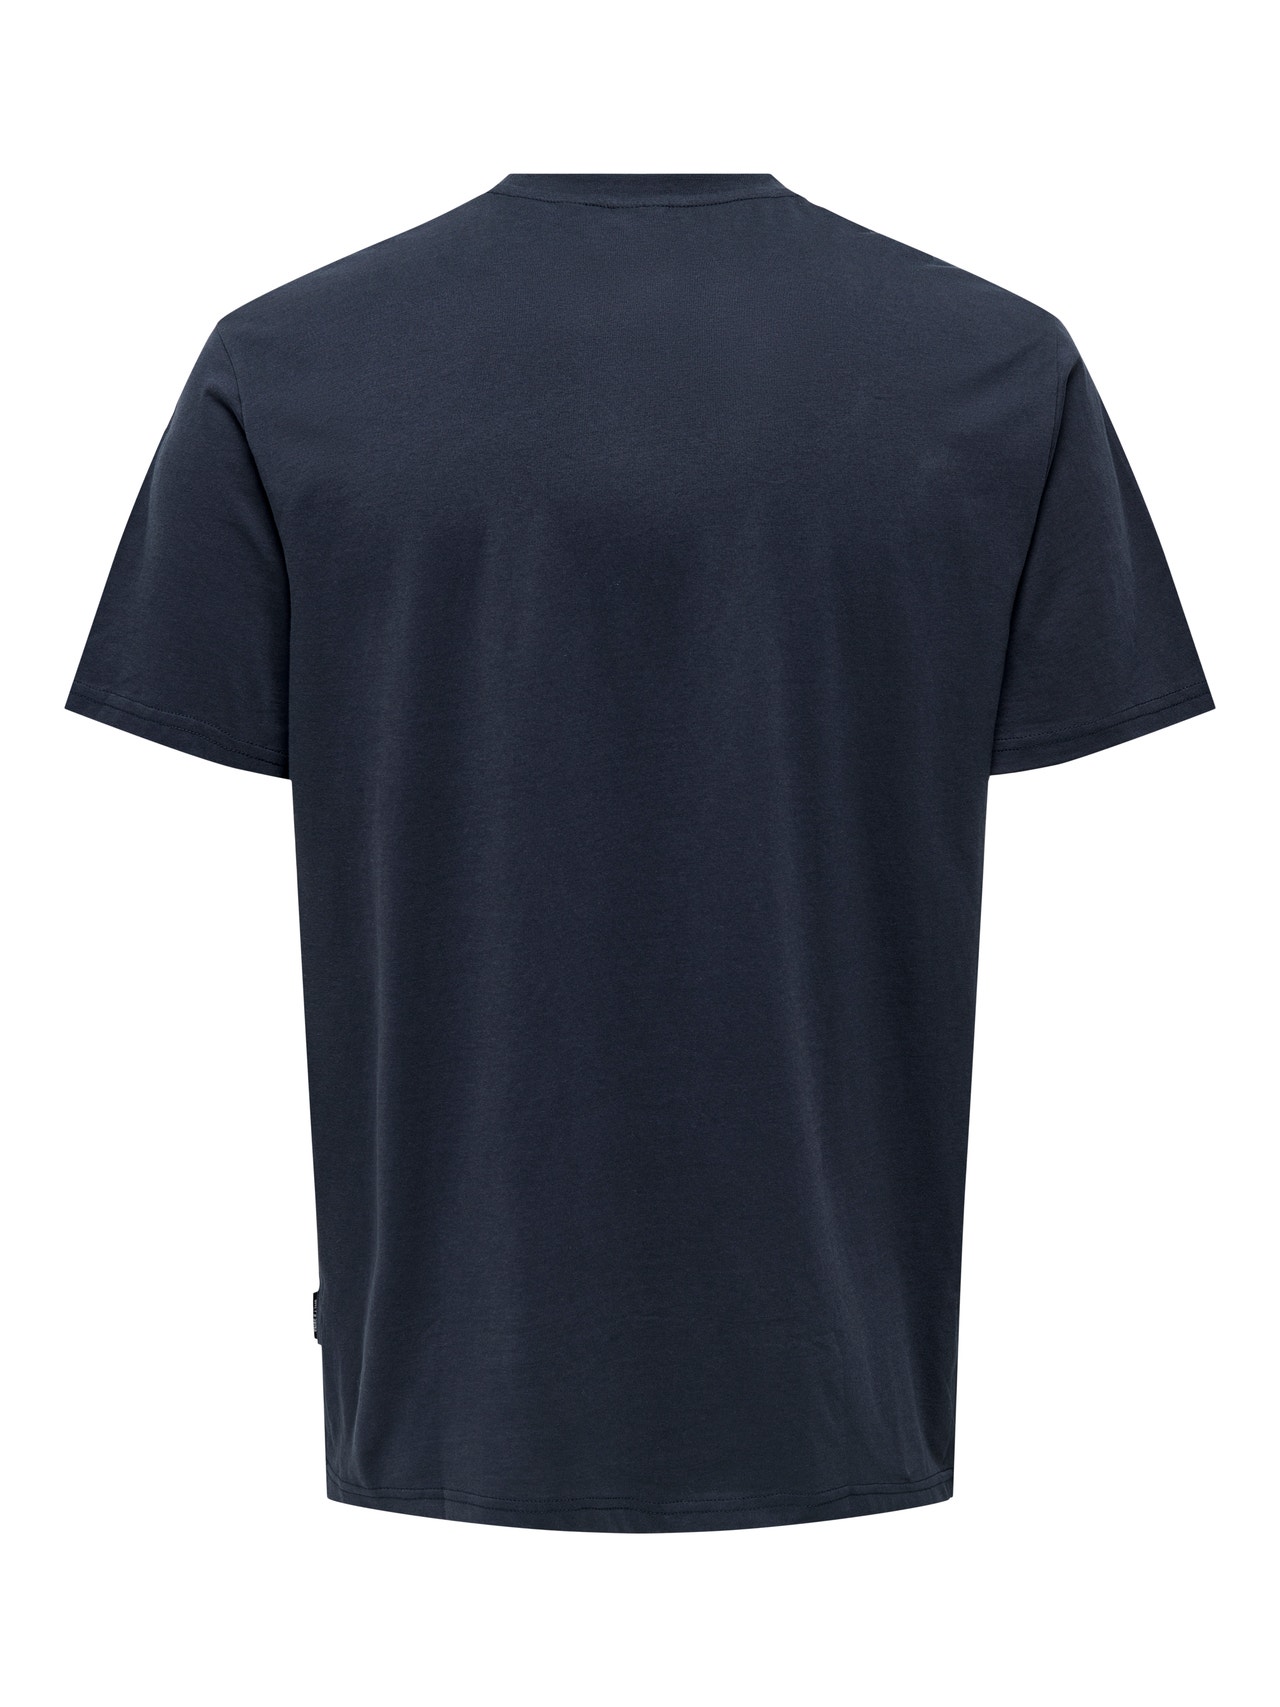 ONLY & SONS o-hals t-shirt med print -Dark Navy - 22027005